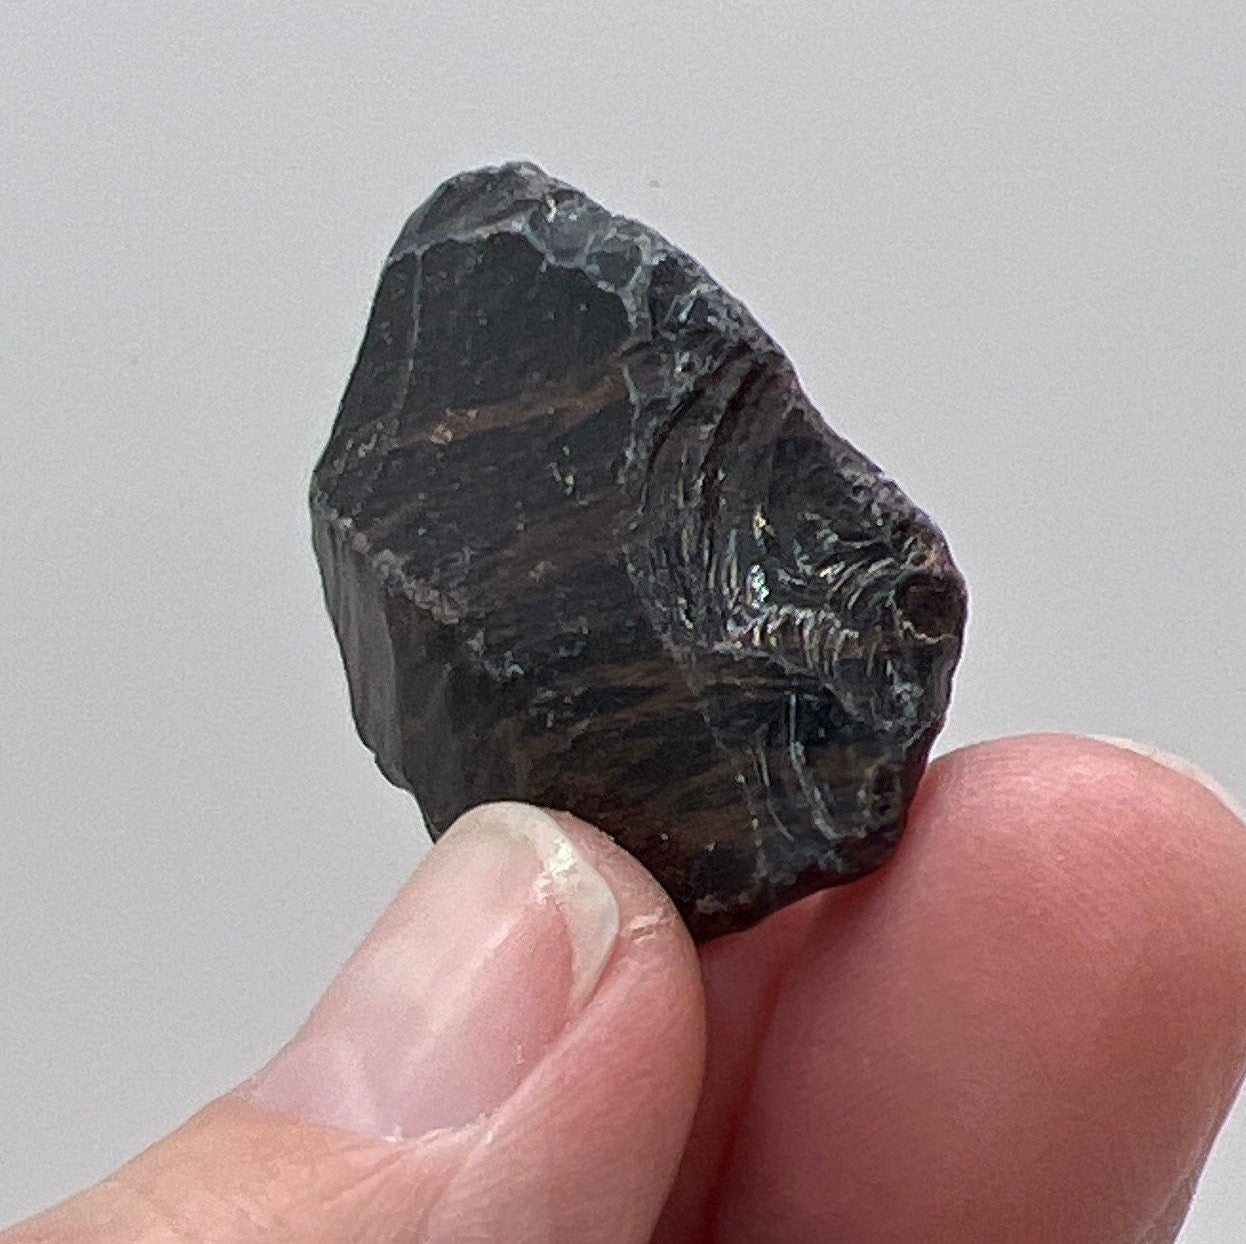 Mahogany Obsidian Raw Tumbled Stone, Found In Utah 0483 (Approx. 3/4”- 1 1/2”)